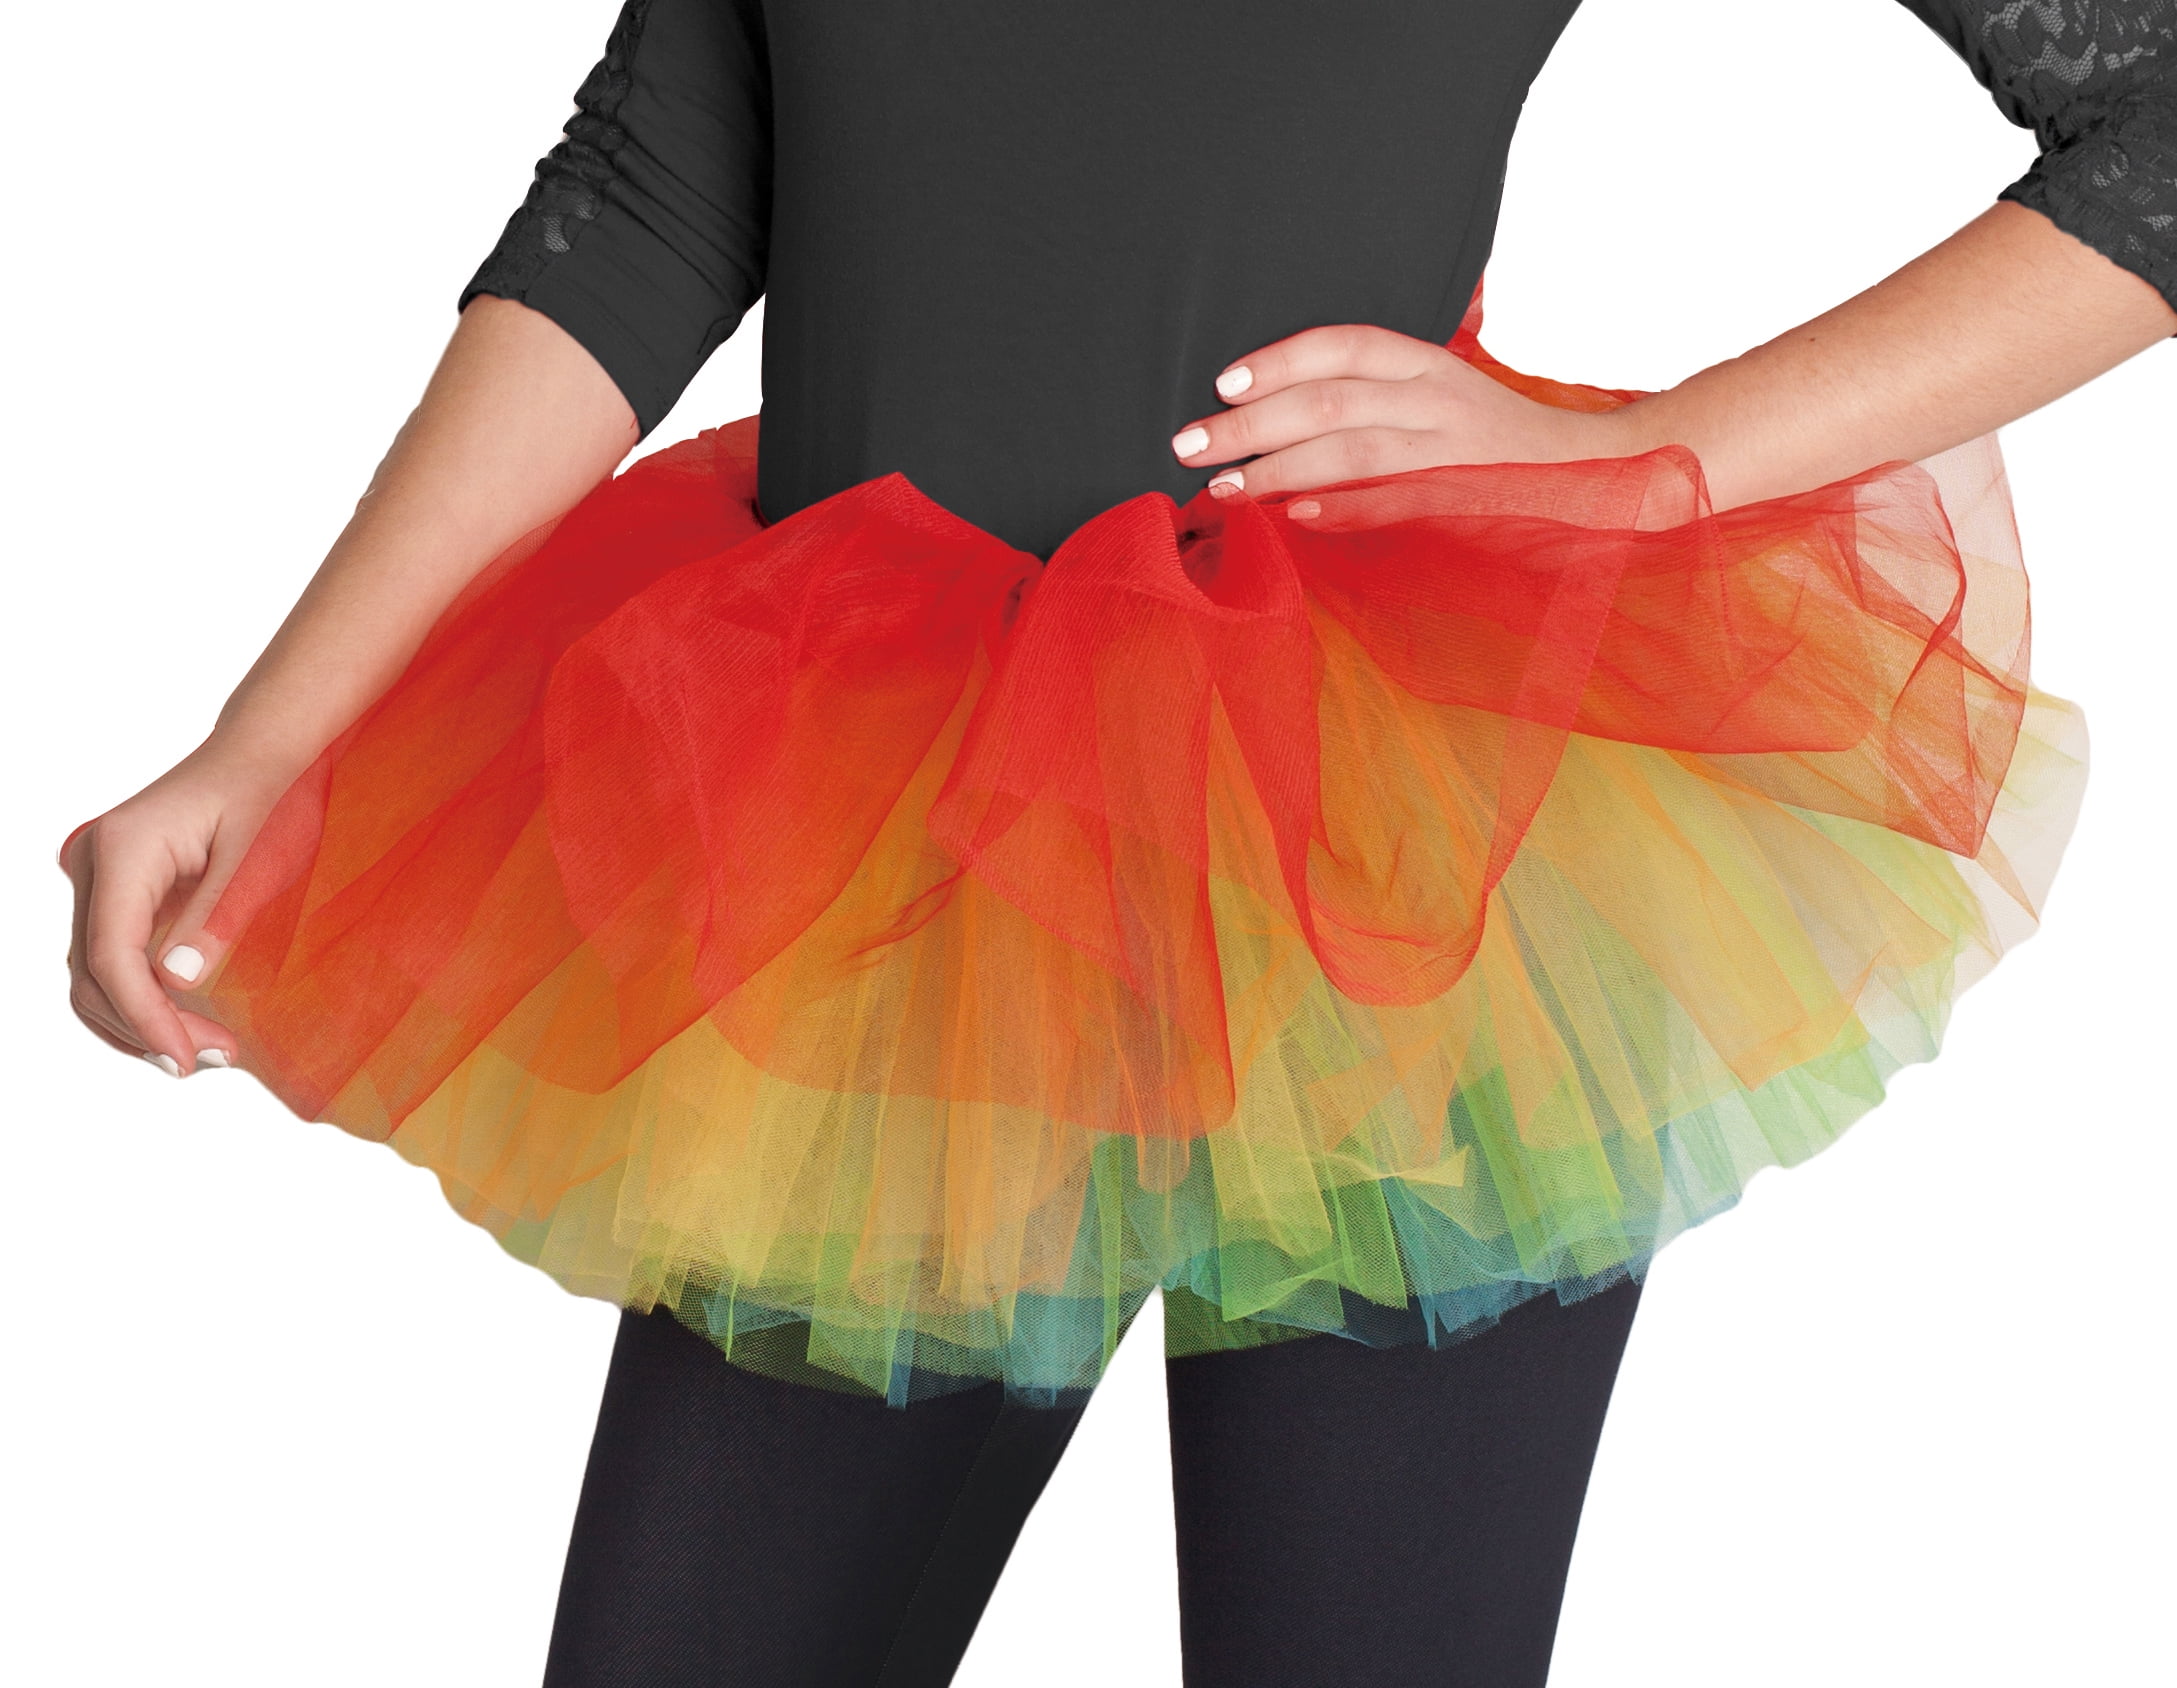 Red Adult Tutu Ballerina Ballet Pettiskirt Elastic Costume Gift Accessory Tu Tu 